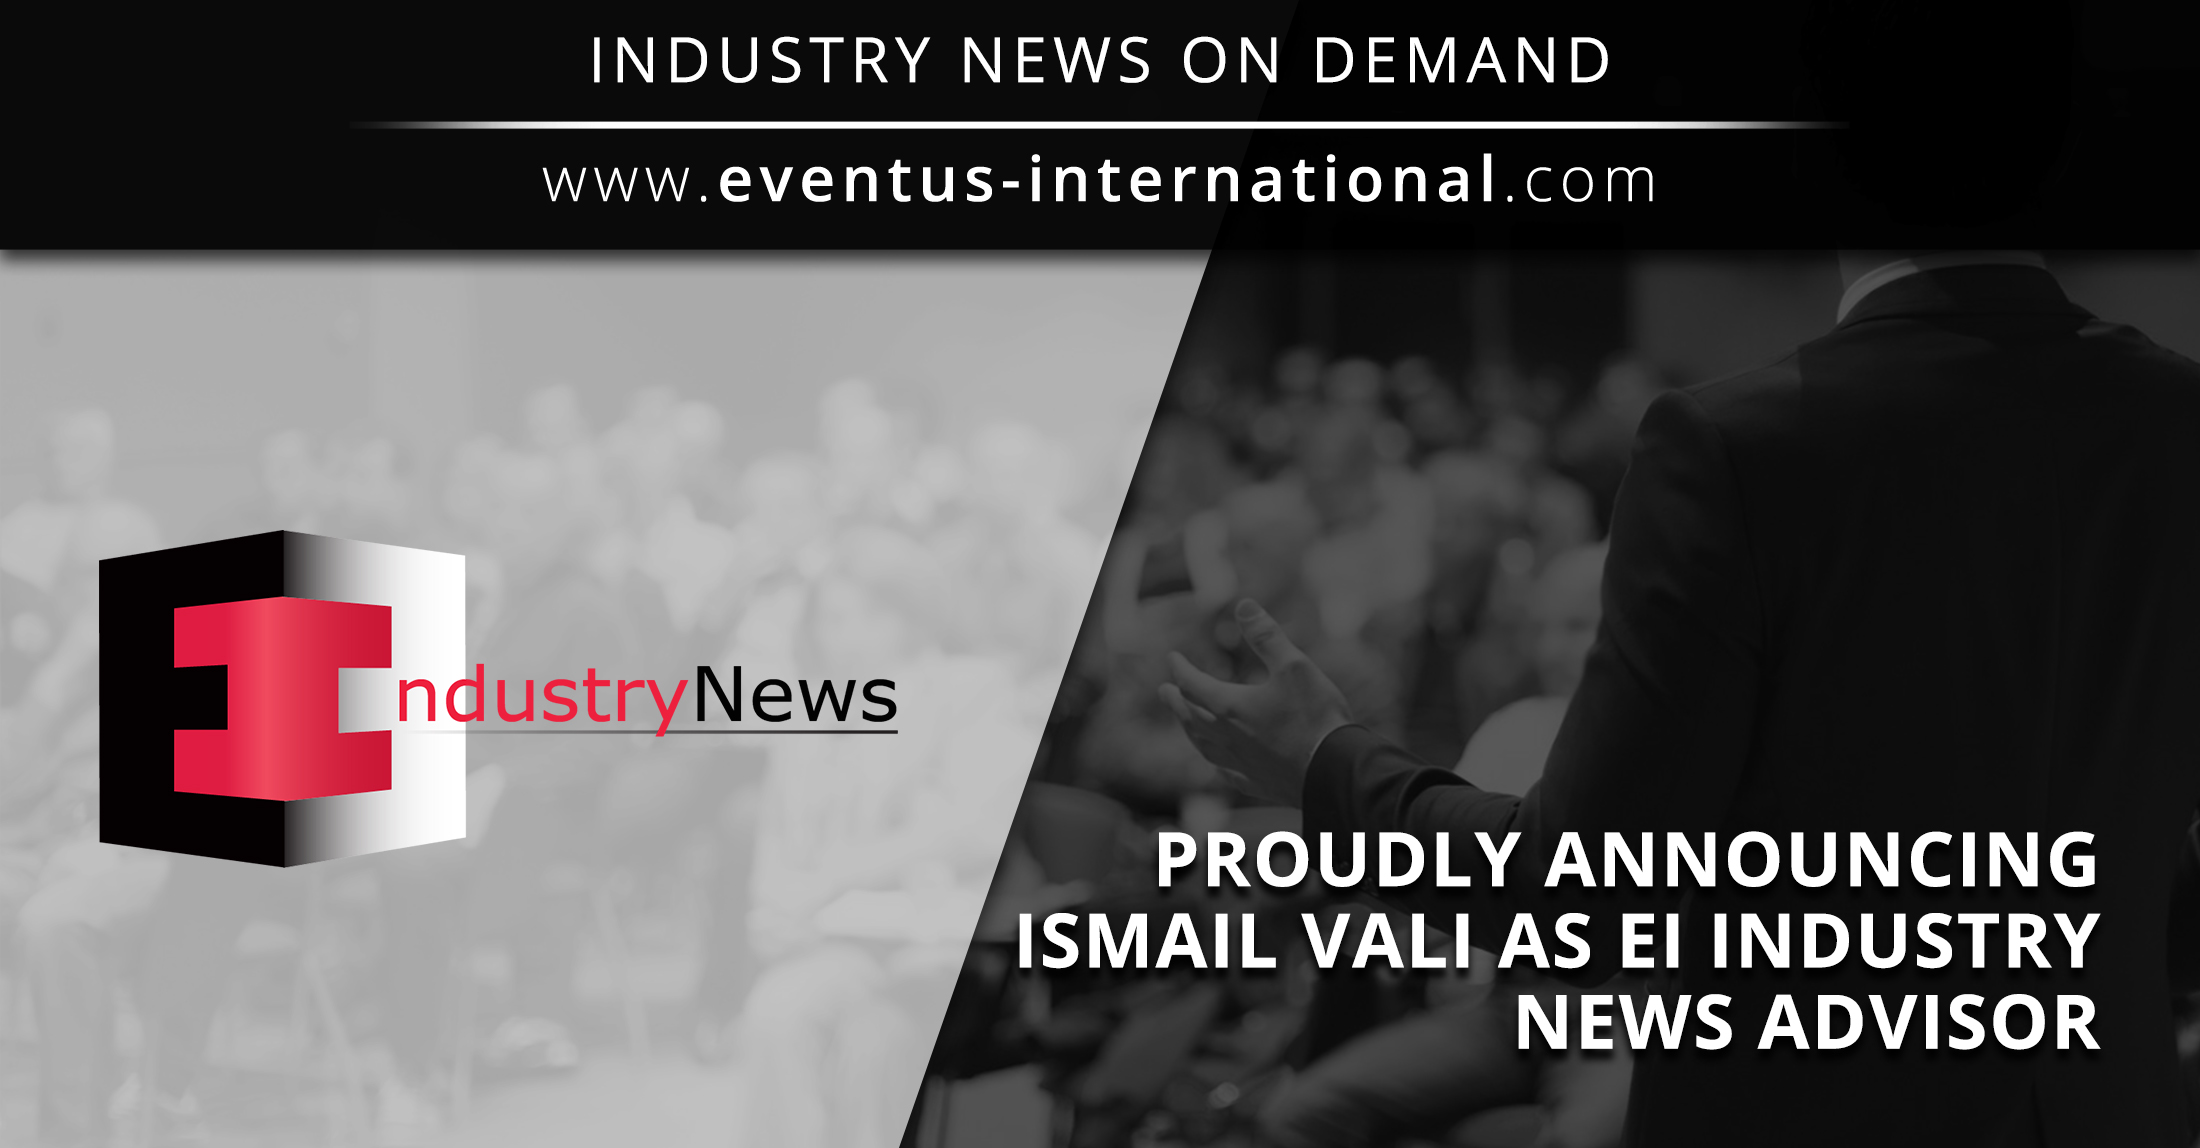 Eventus International Announces Ismail Vali As An Advisor To EI Industry News